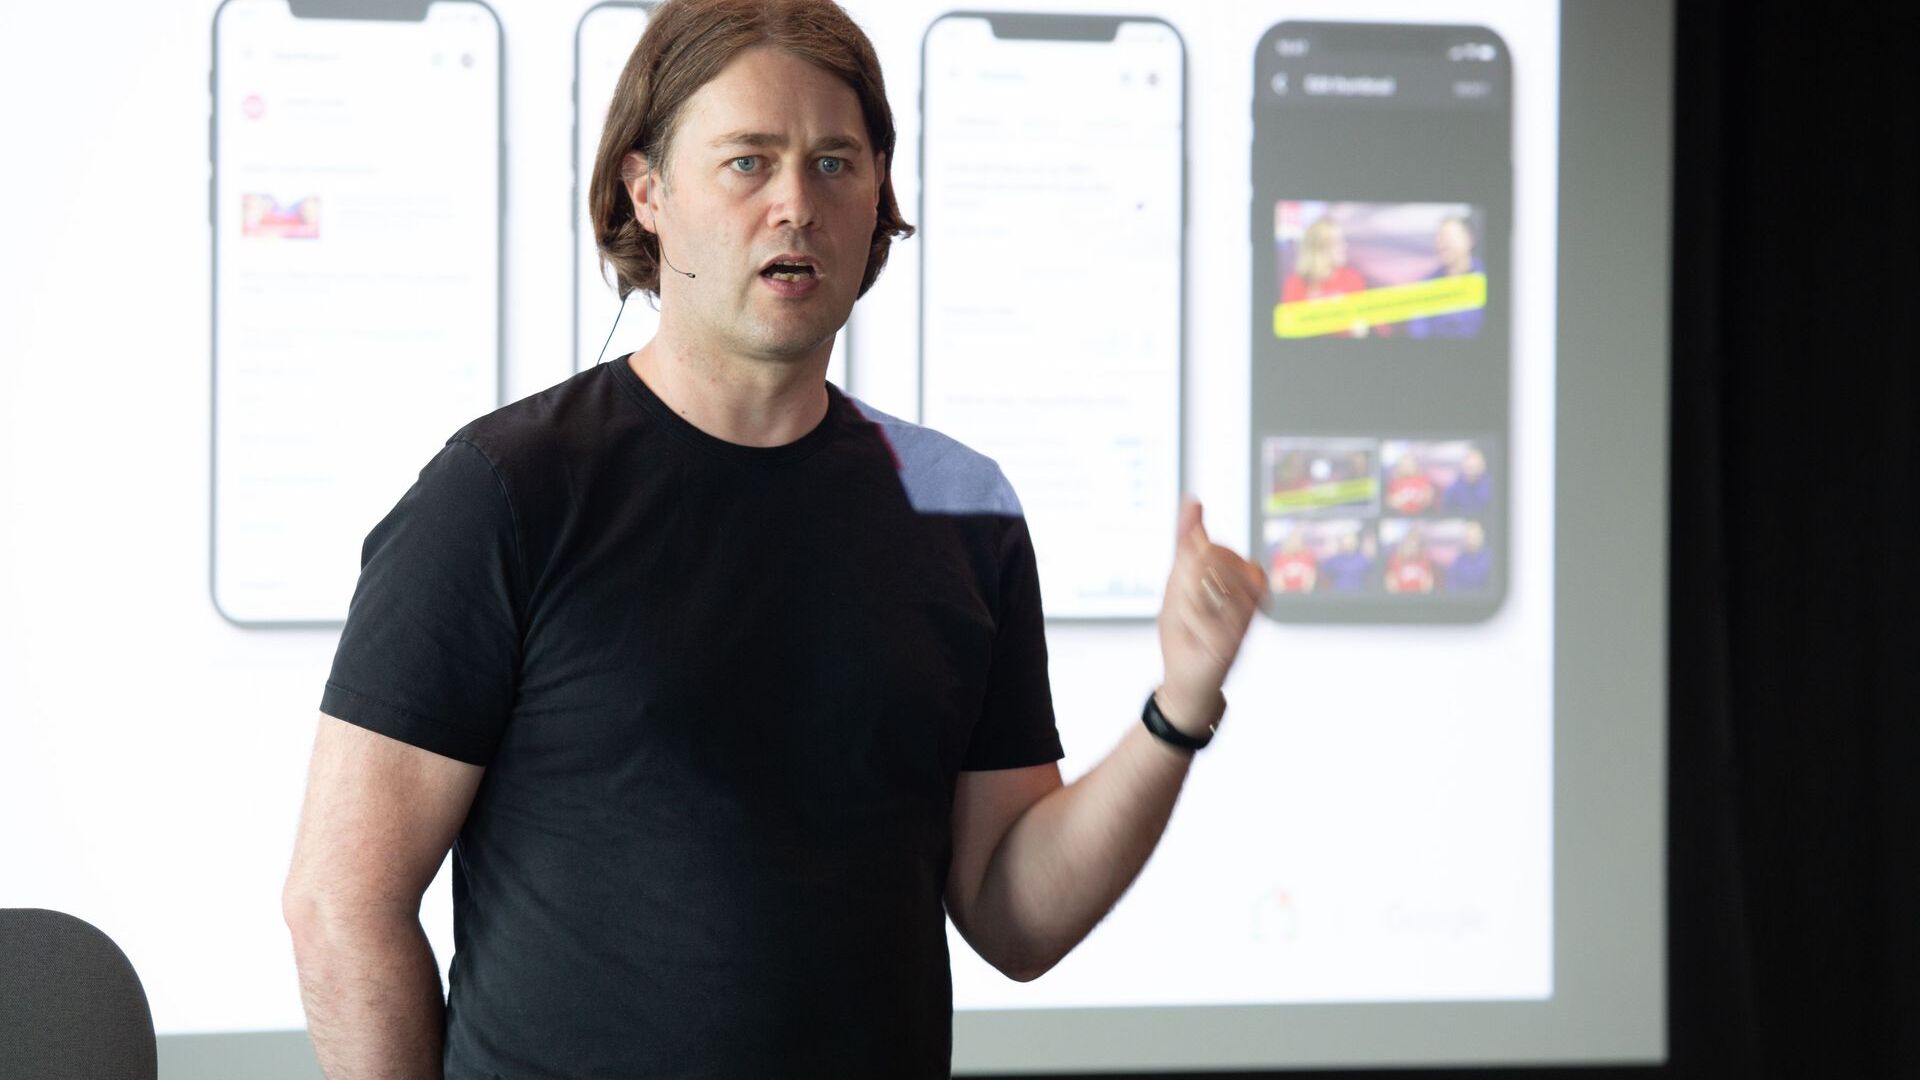 Geoff Van der Meer، معاون مهندسی YouTube، در افتتاحیه رسمی پردیس Europaallee جدید گوگل در زوریخ در 27 ژوئن 2022 شرکت کرد.